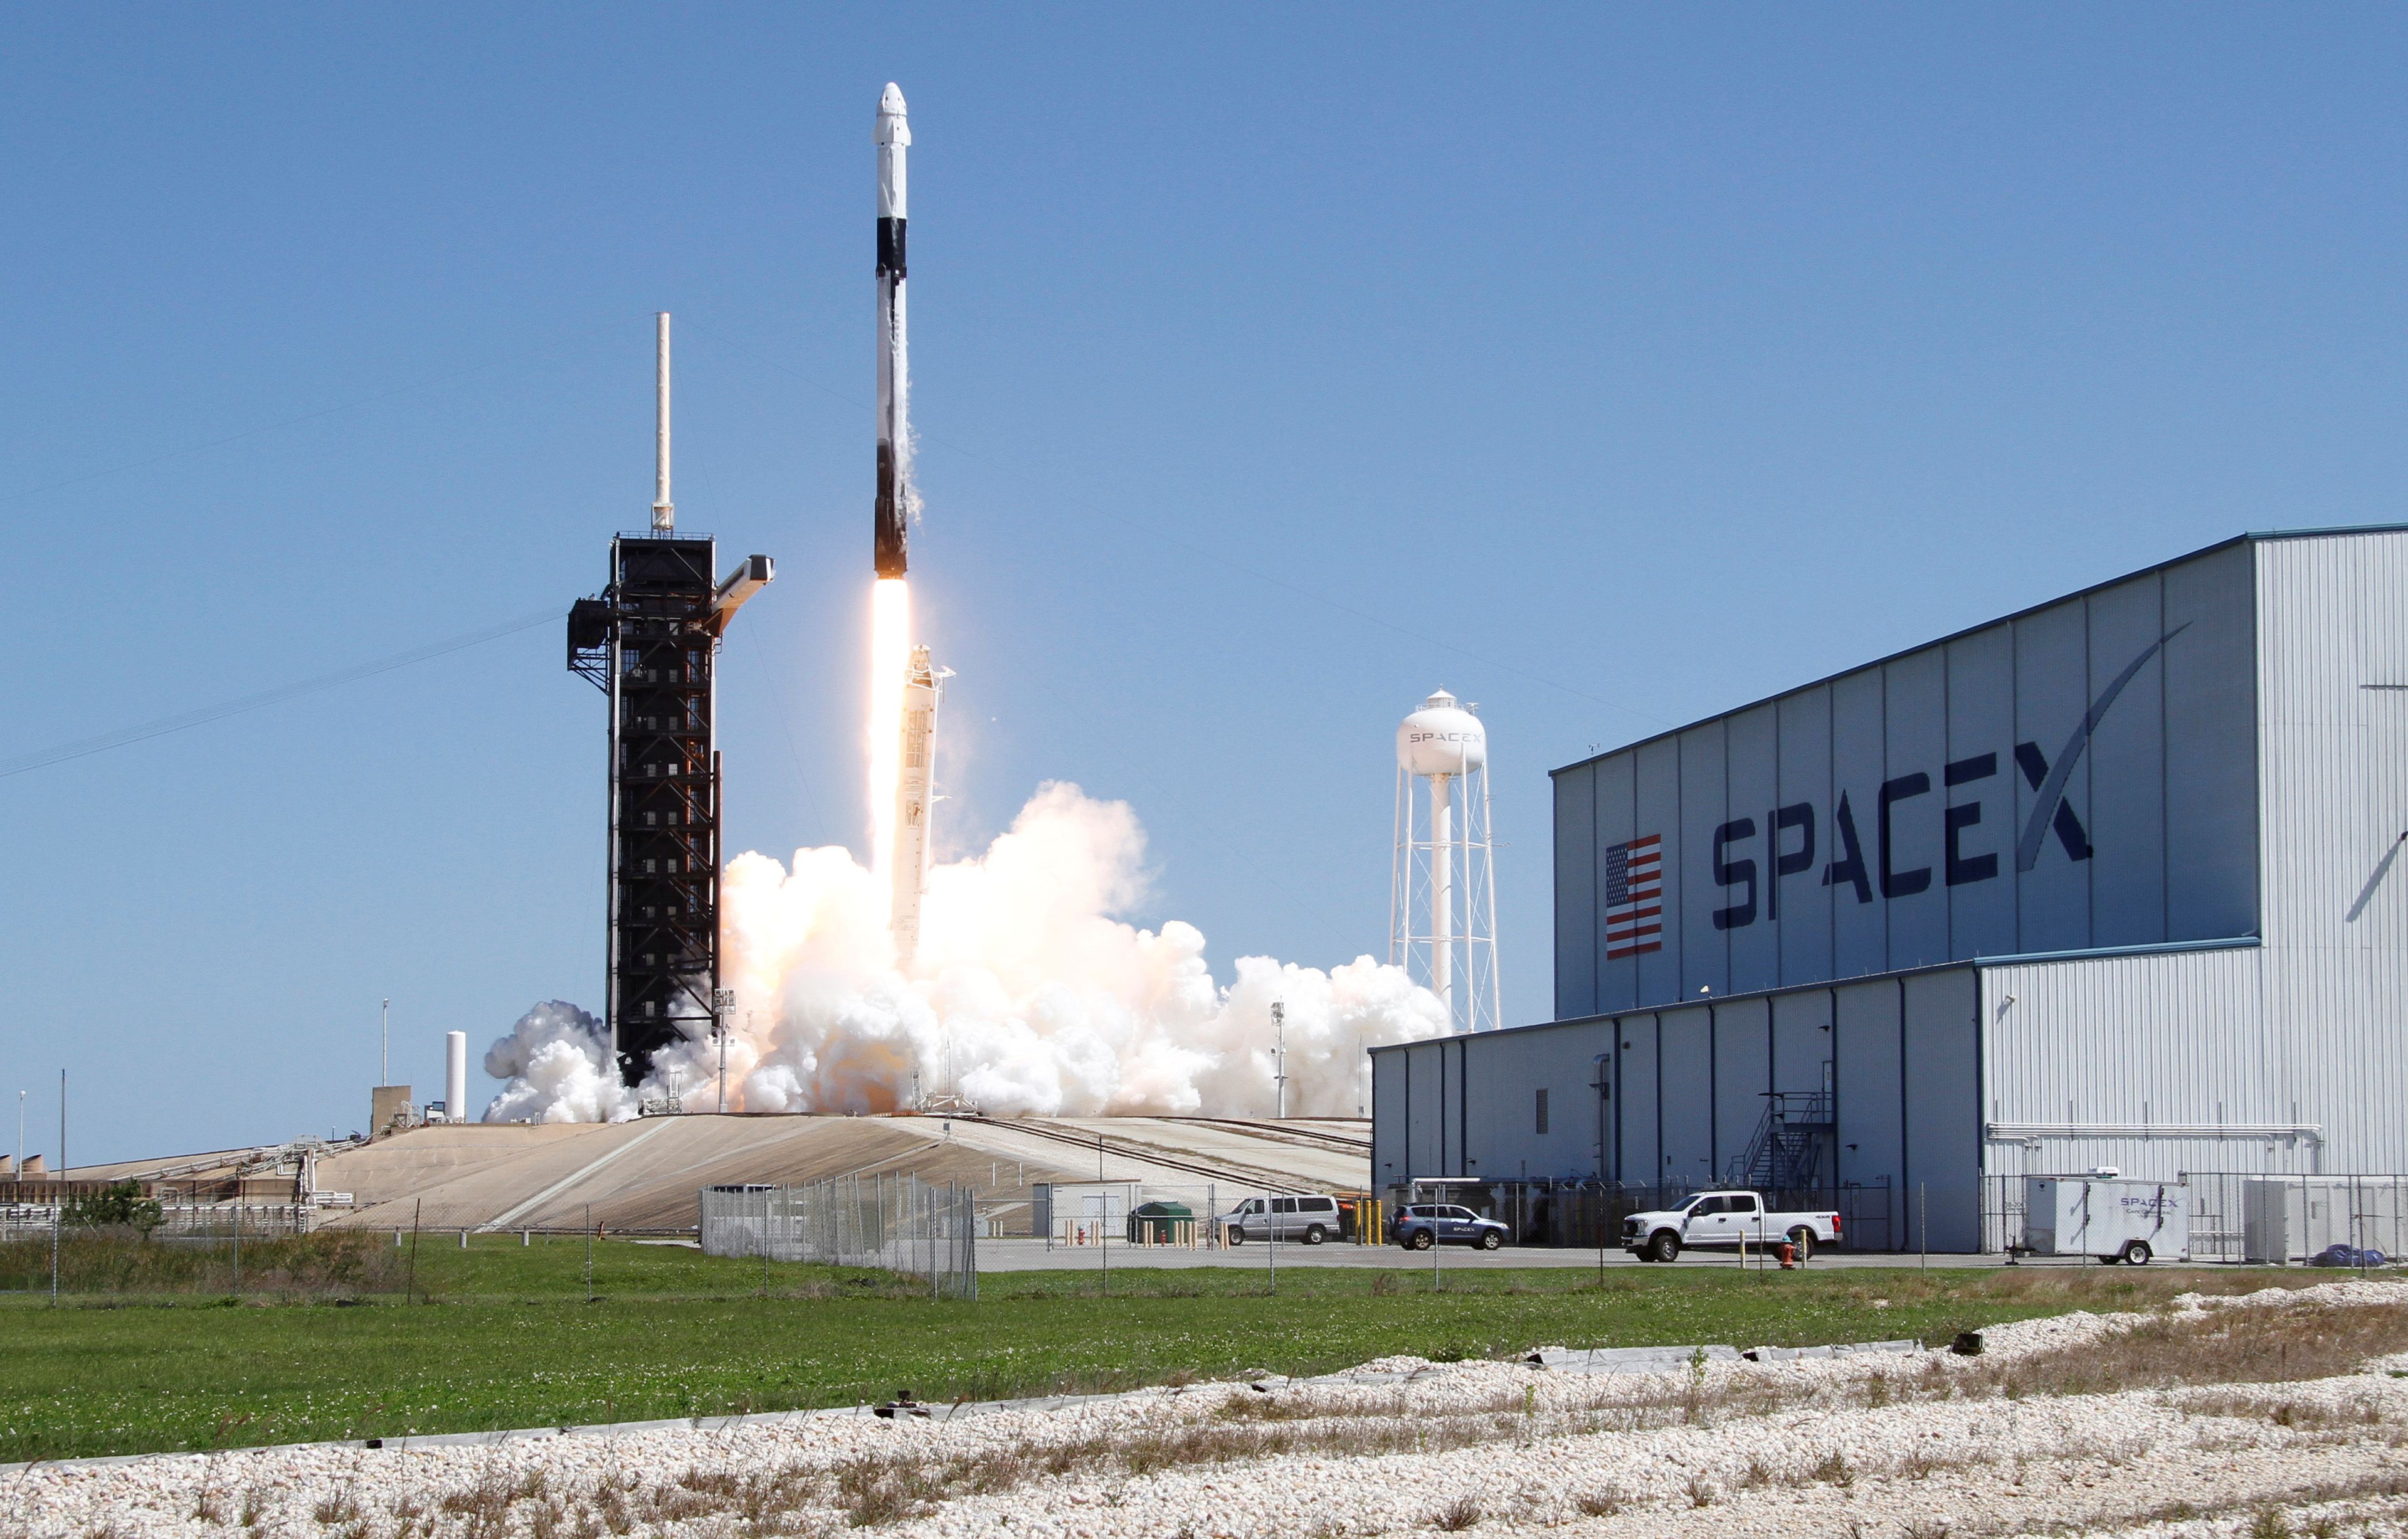 Un cohete Falcon 9 de SpaceX.